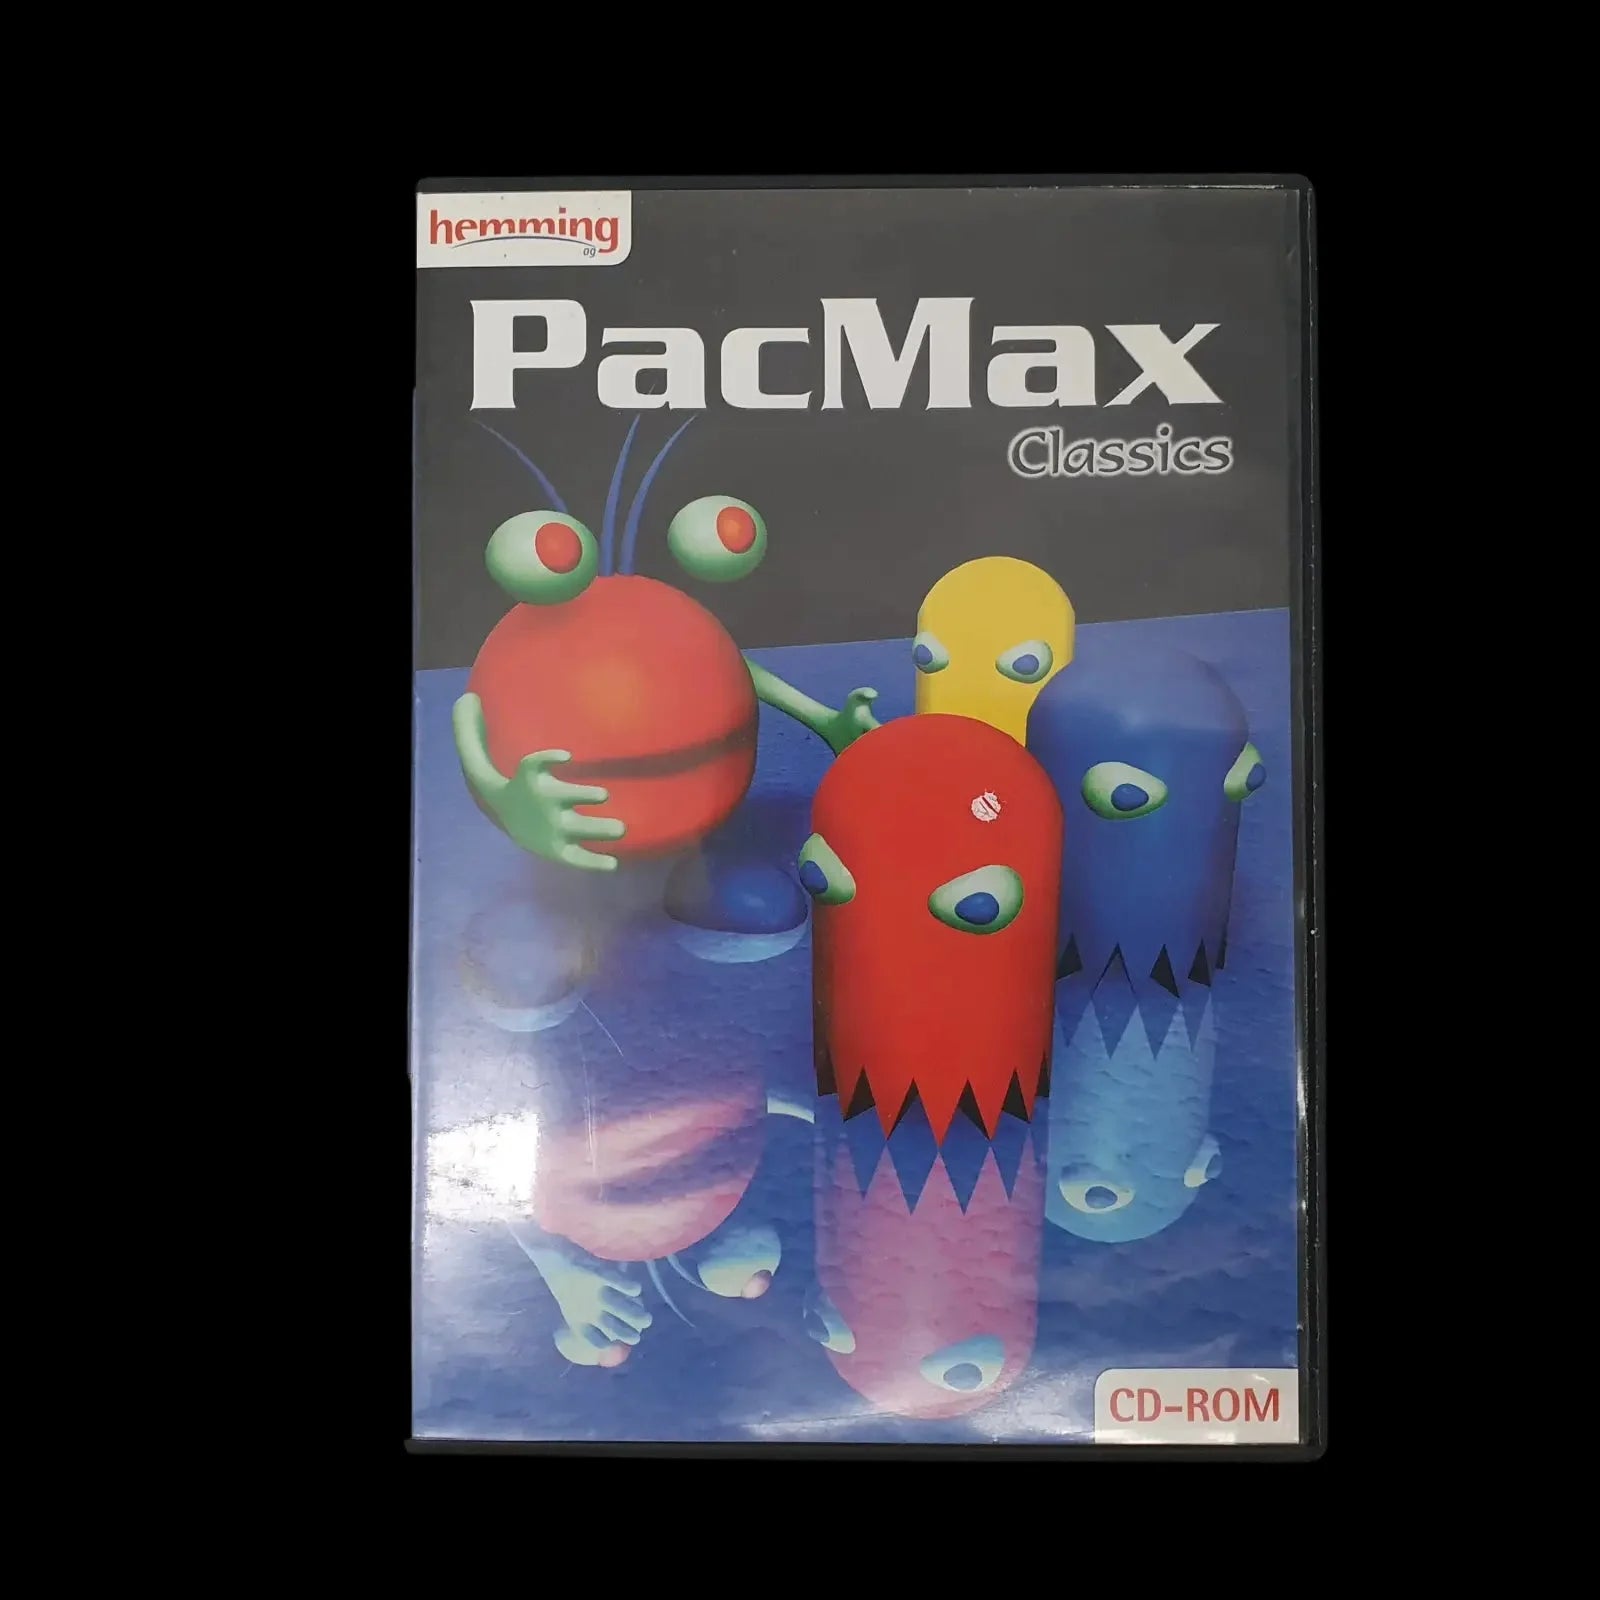 Pacmax Classics Pc Hemmings Video Game - Games - 1 - 2477